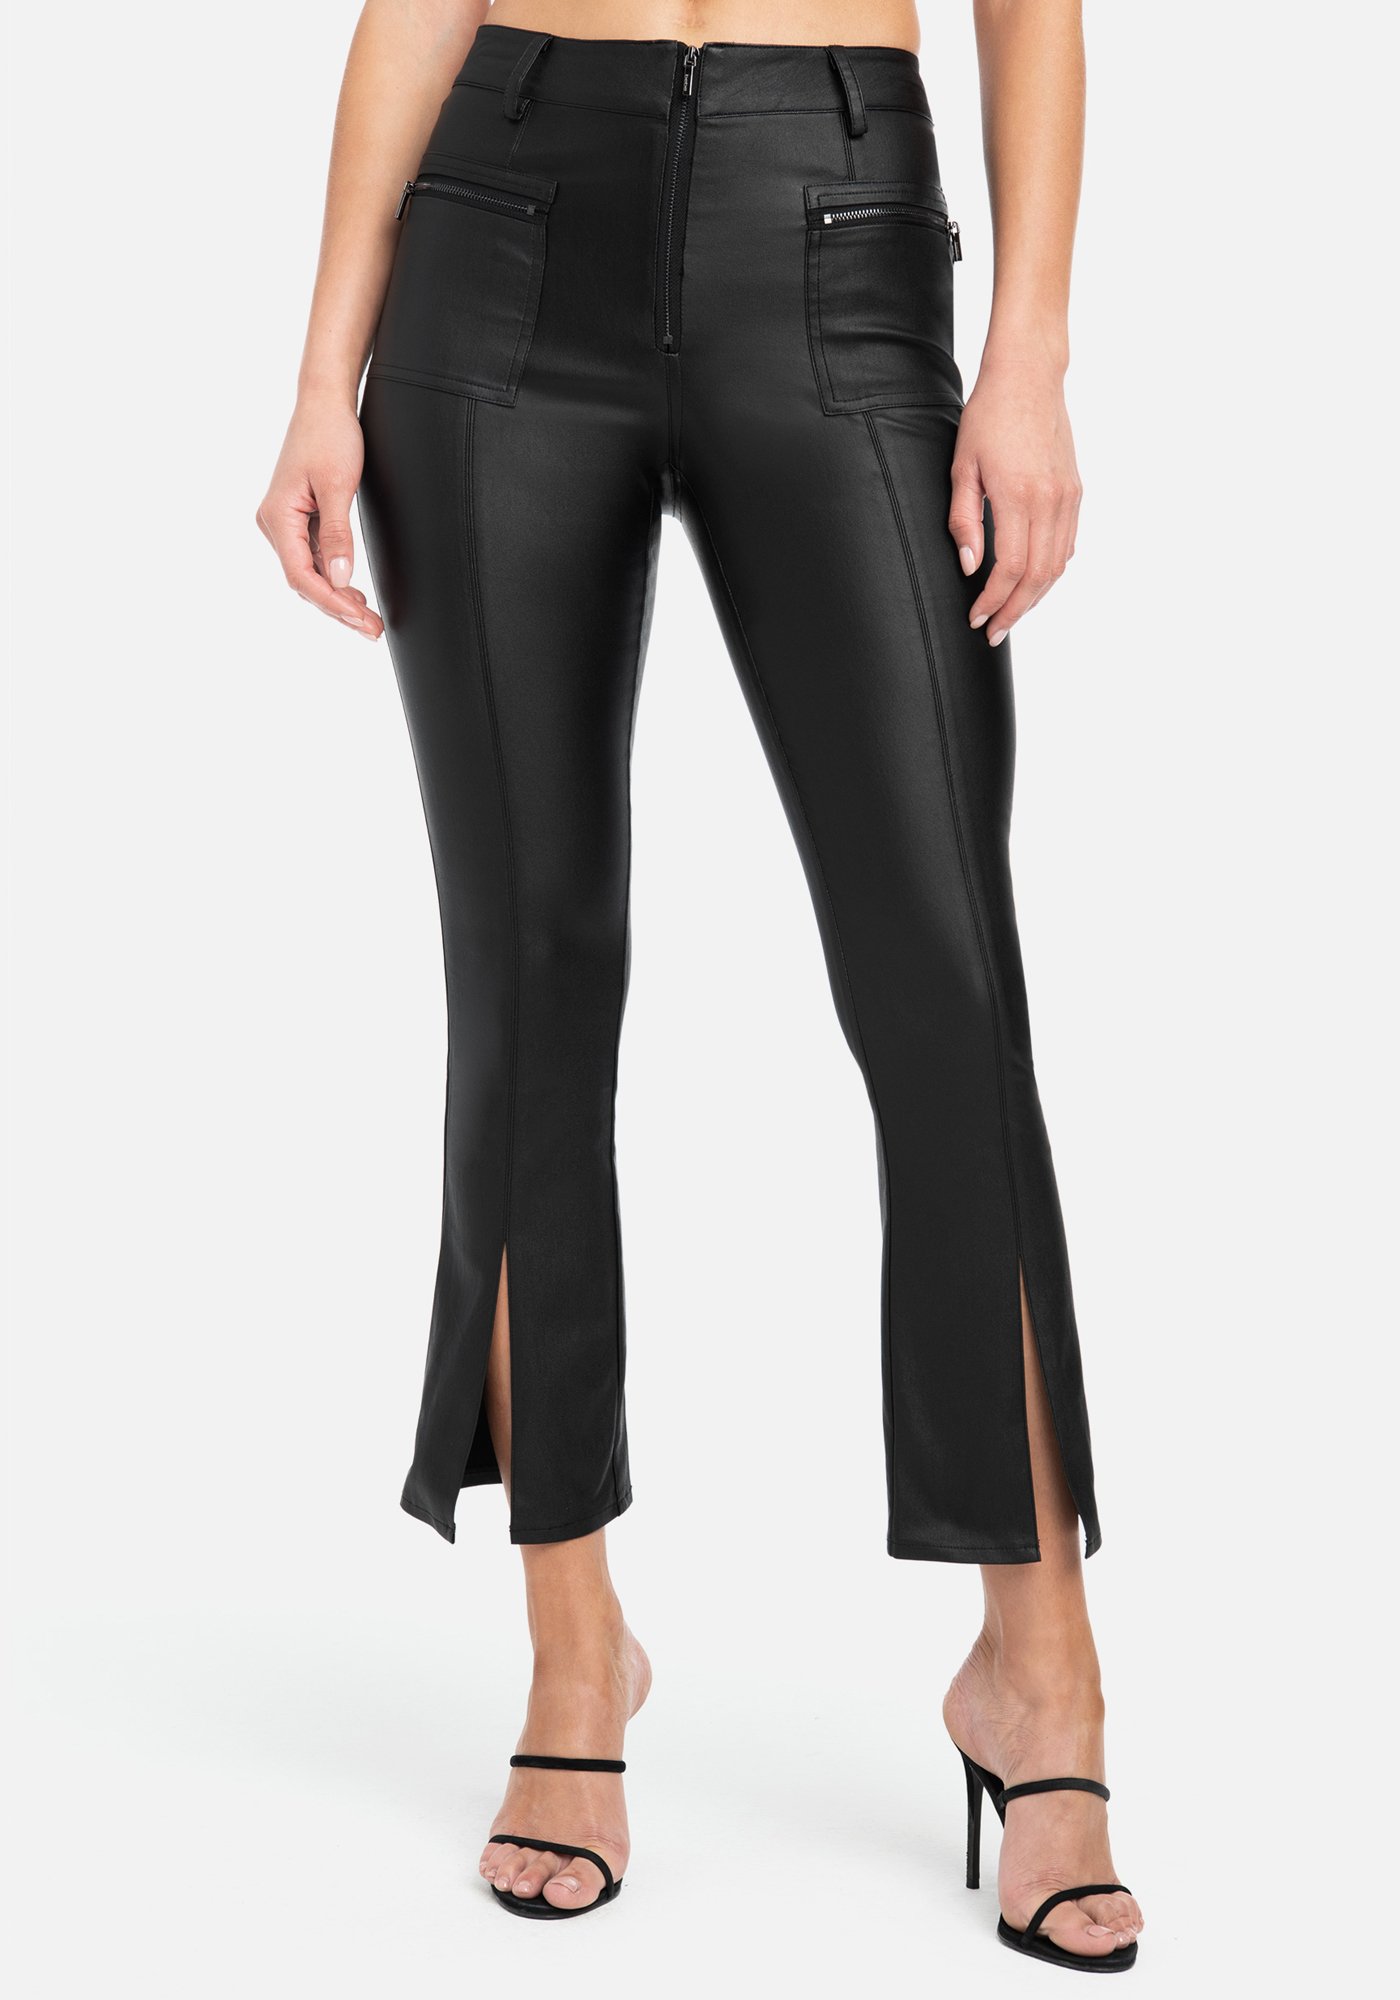 Bebe Women's Detail Front Slit Coated Pant, Size 10 in Black Spandex/Nylon